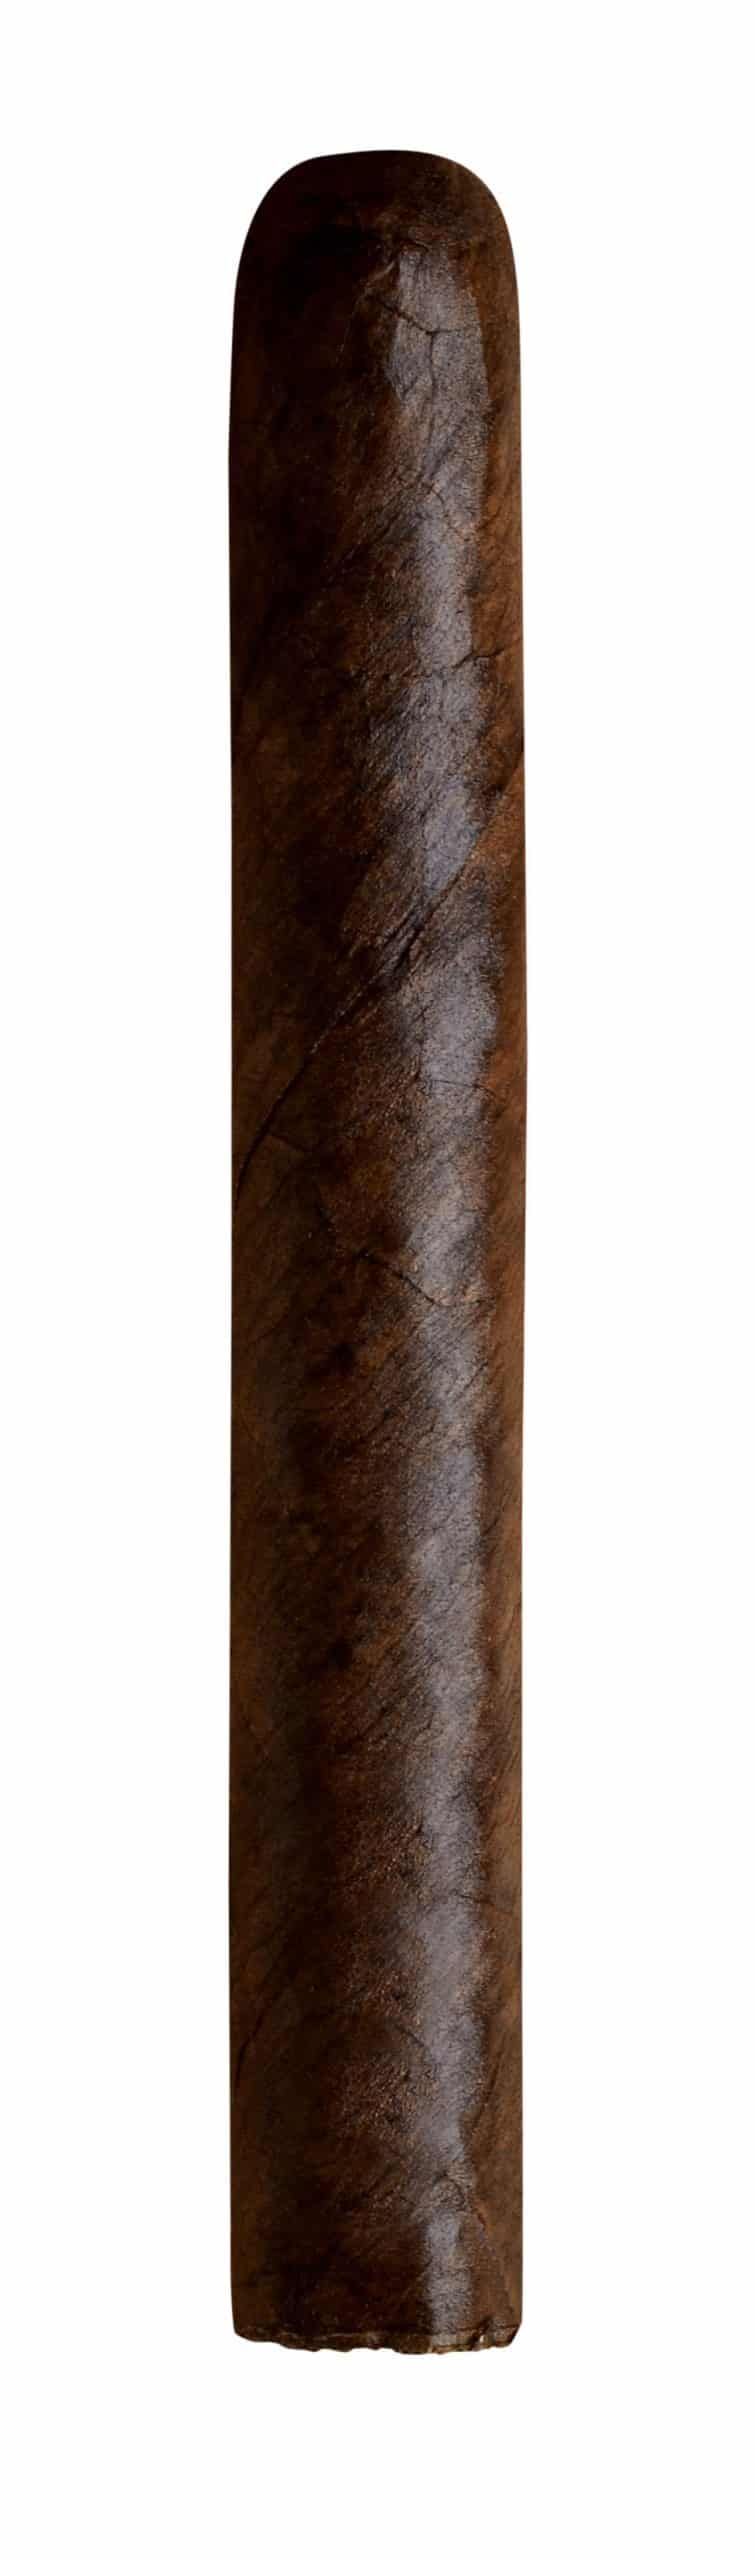 decision 250 single cigar